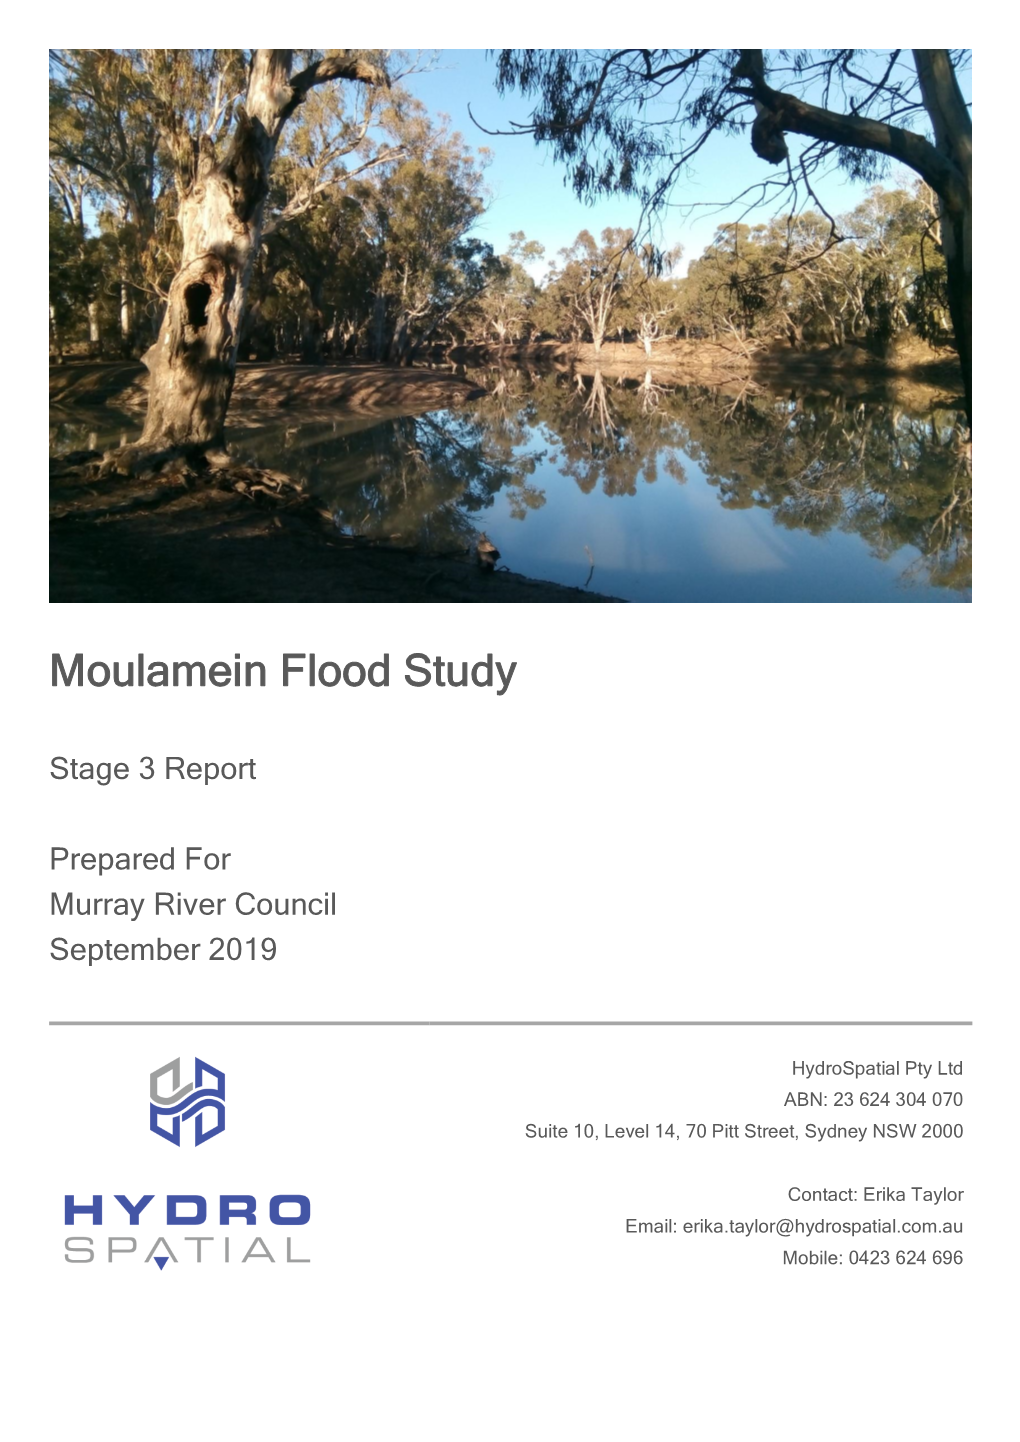 Moulamein Flood Study